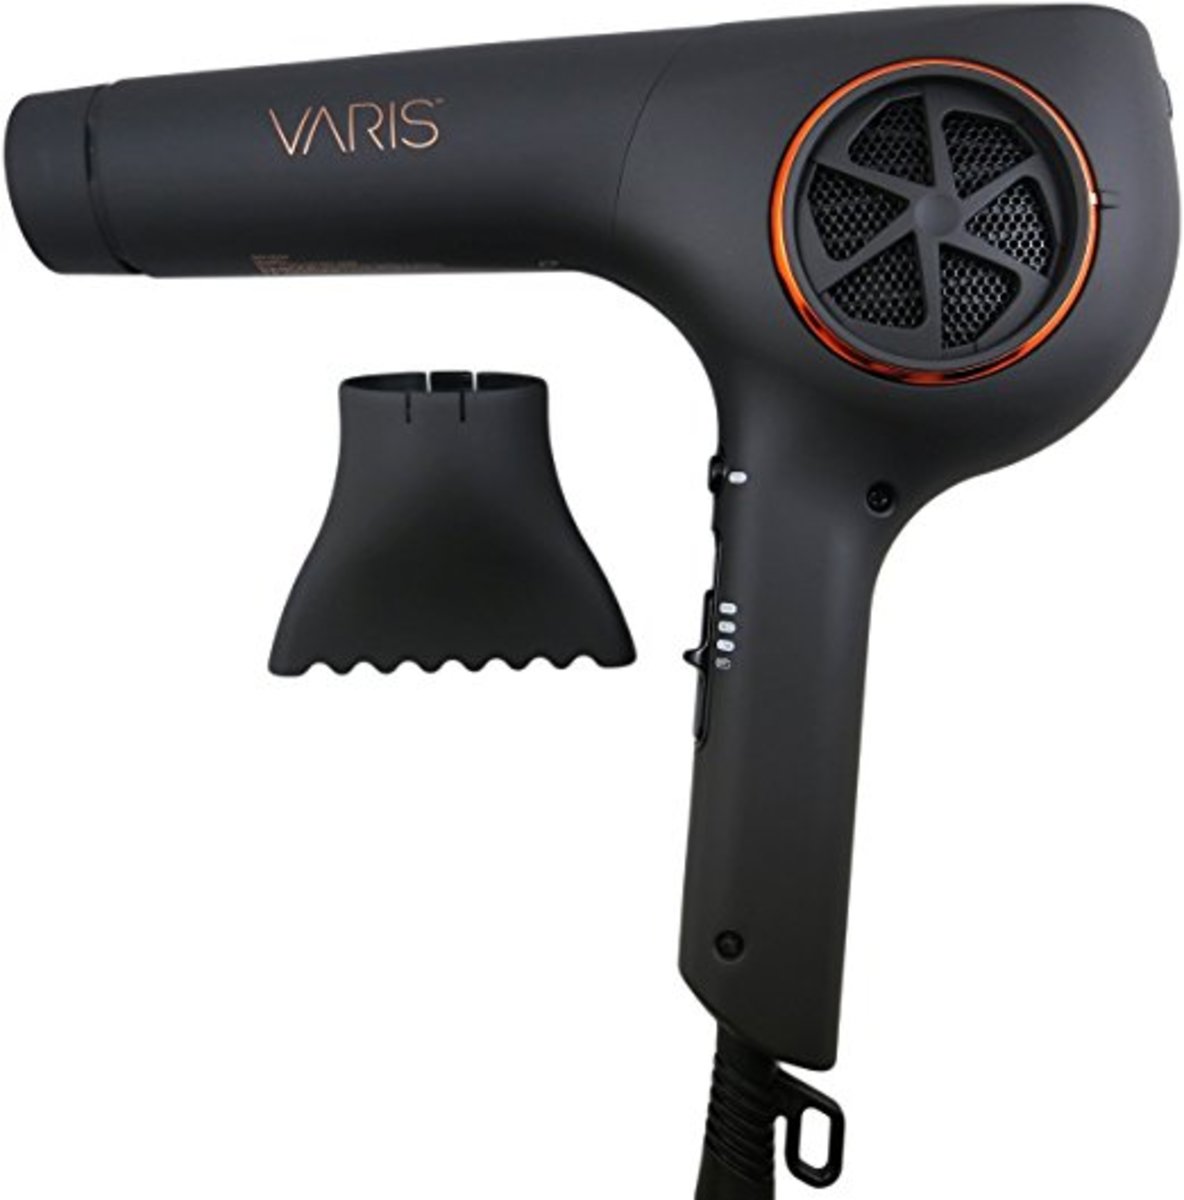 Varis Creative Energy Hair Dryer, $250, available here. Photo: Courtesy of Varis